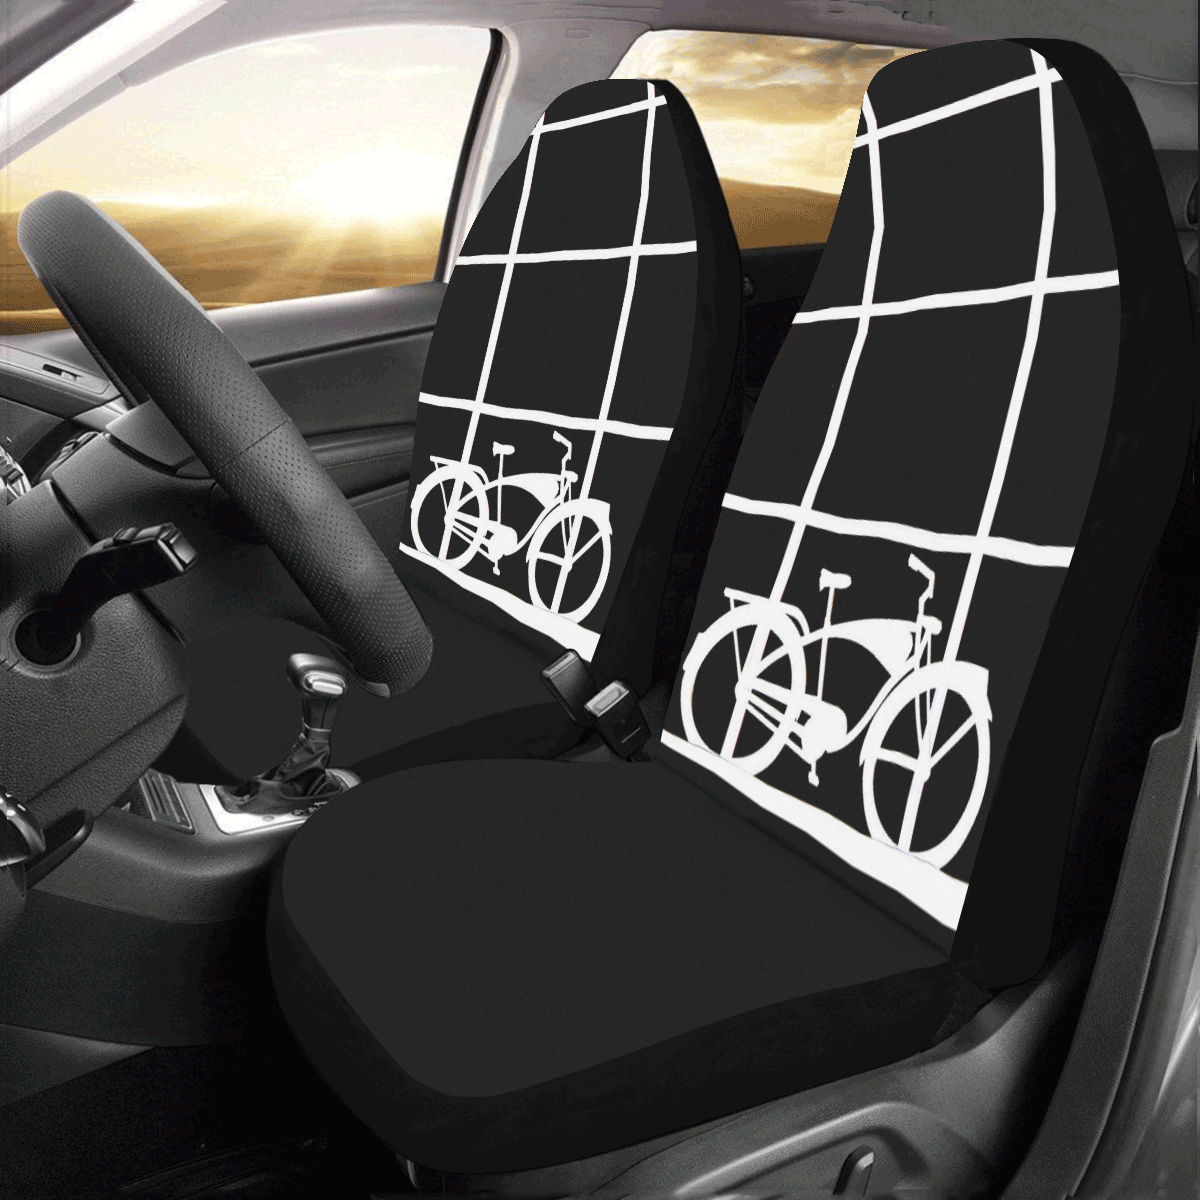 ROADEE Car Seat Covers (Set of 2)